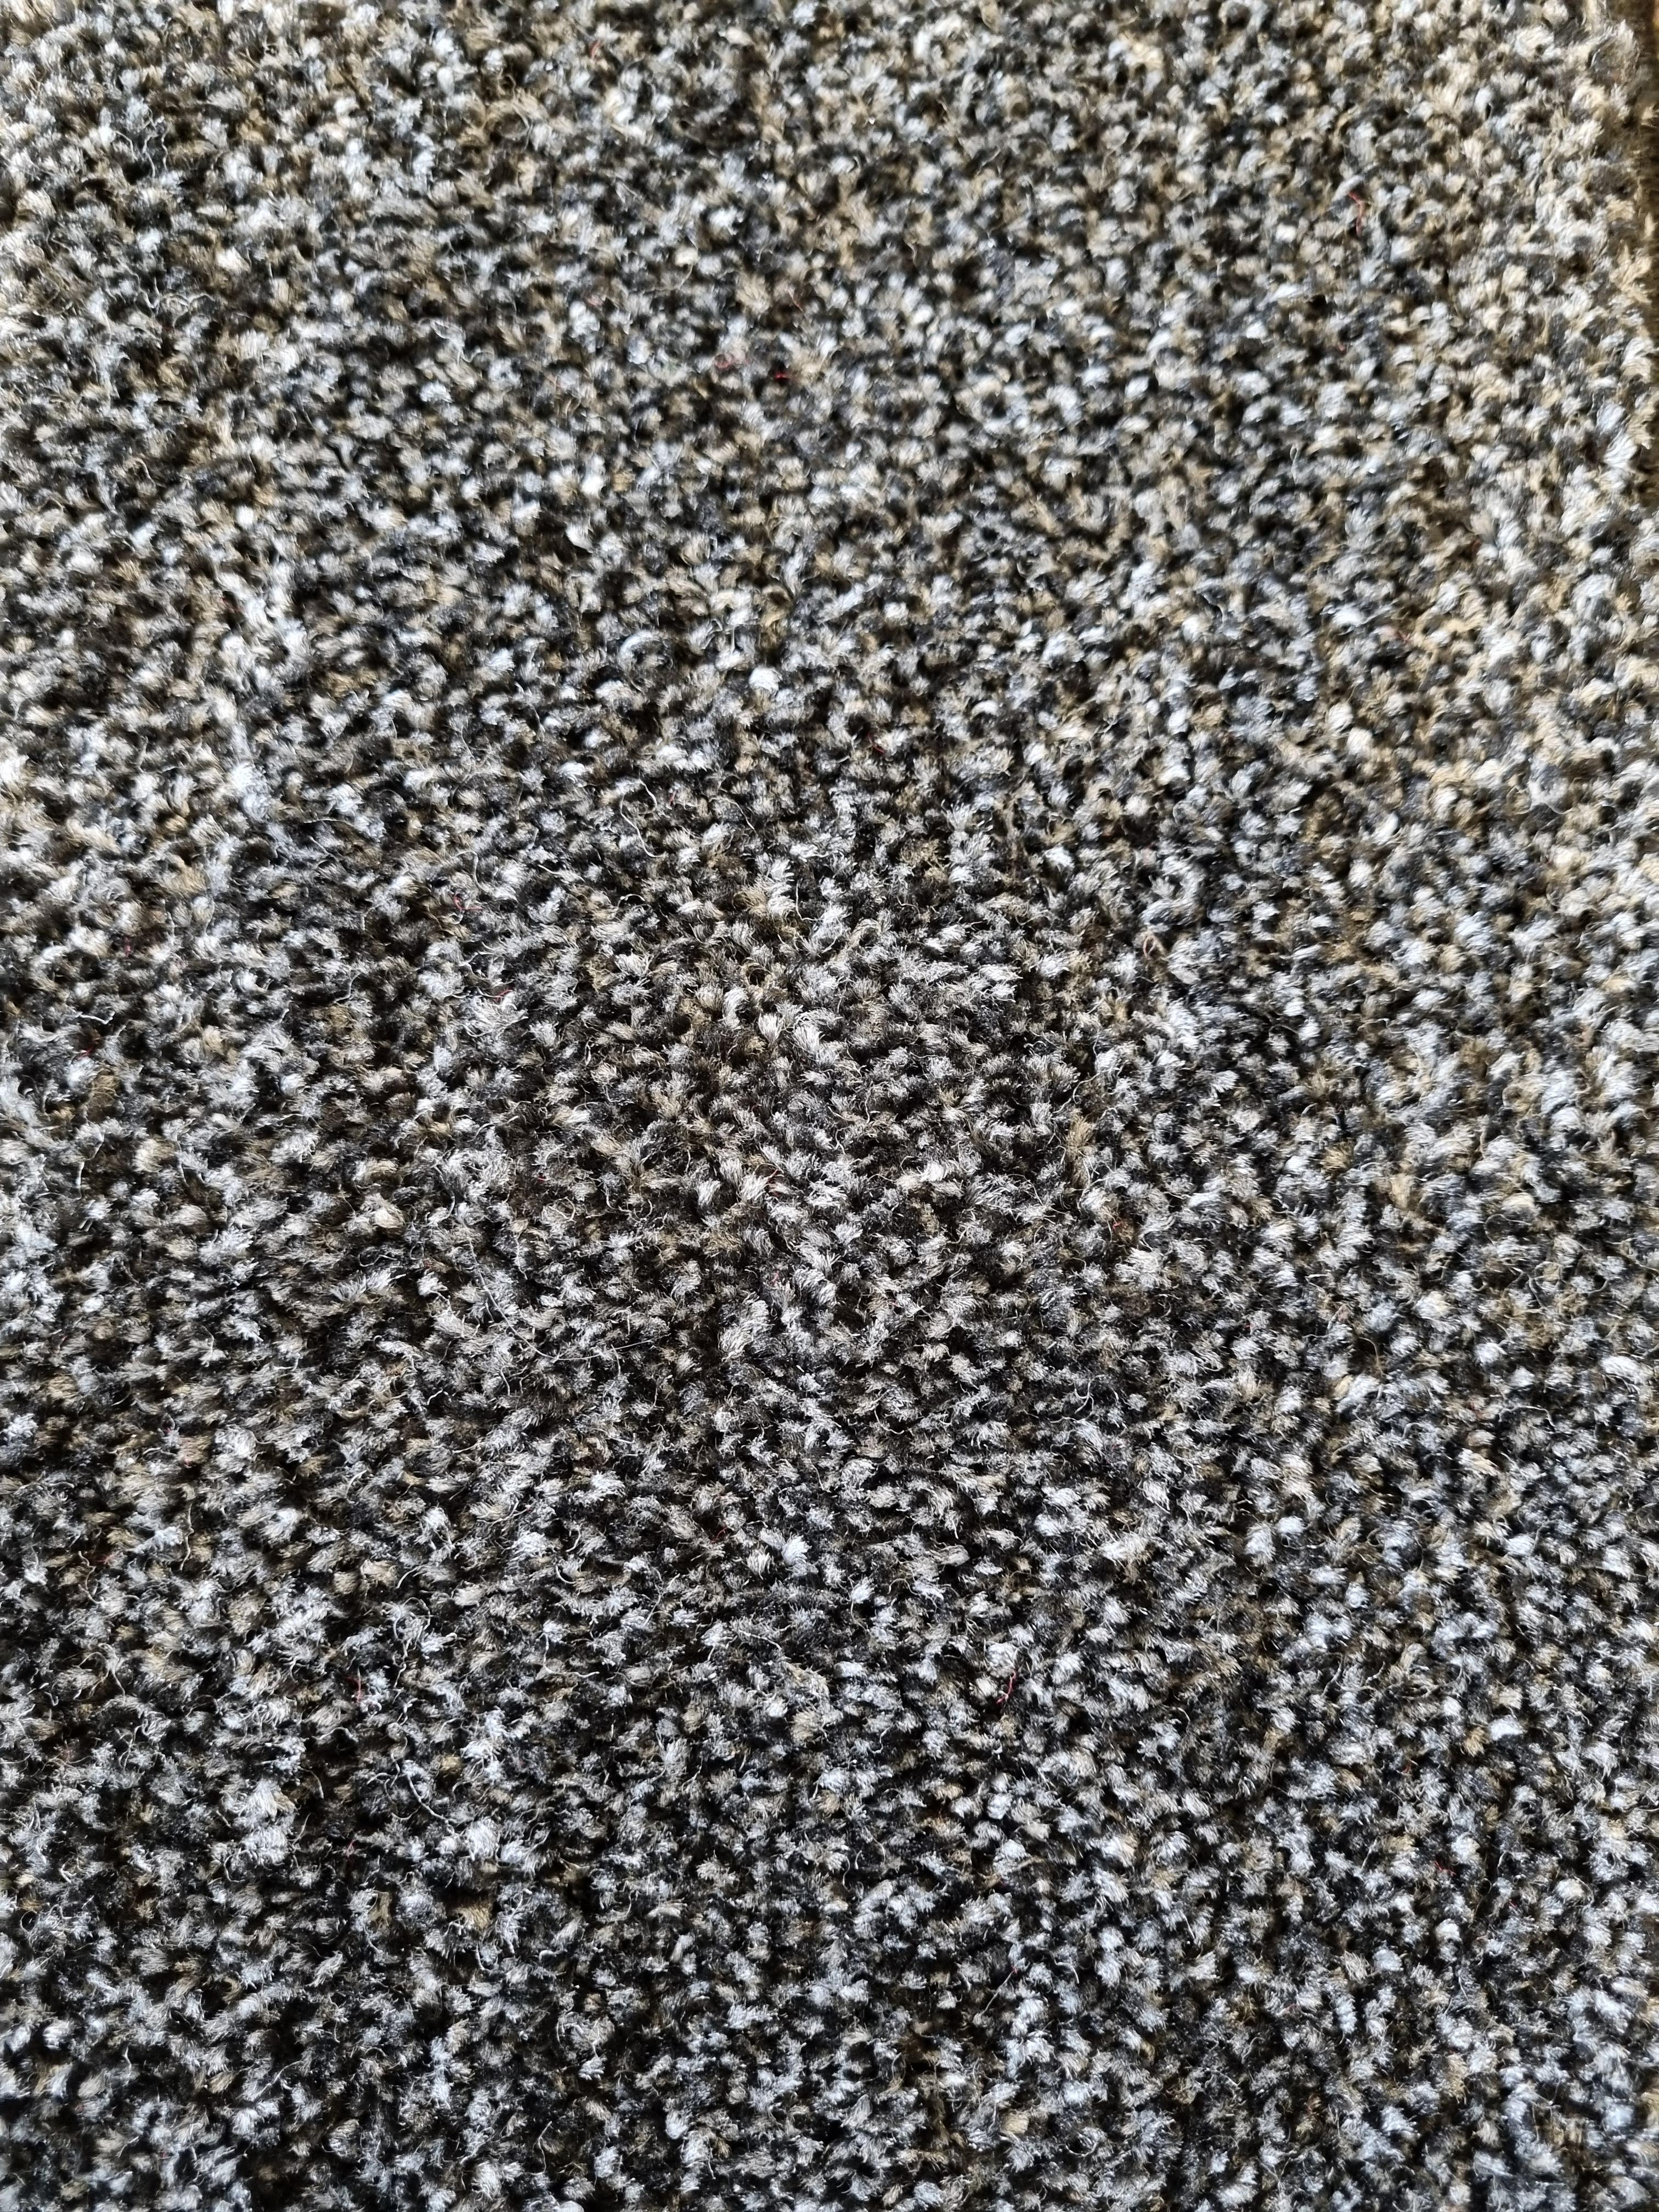 Hong Kong carpet